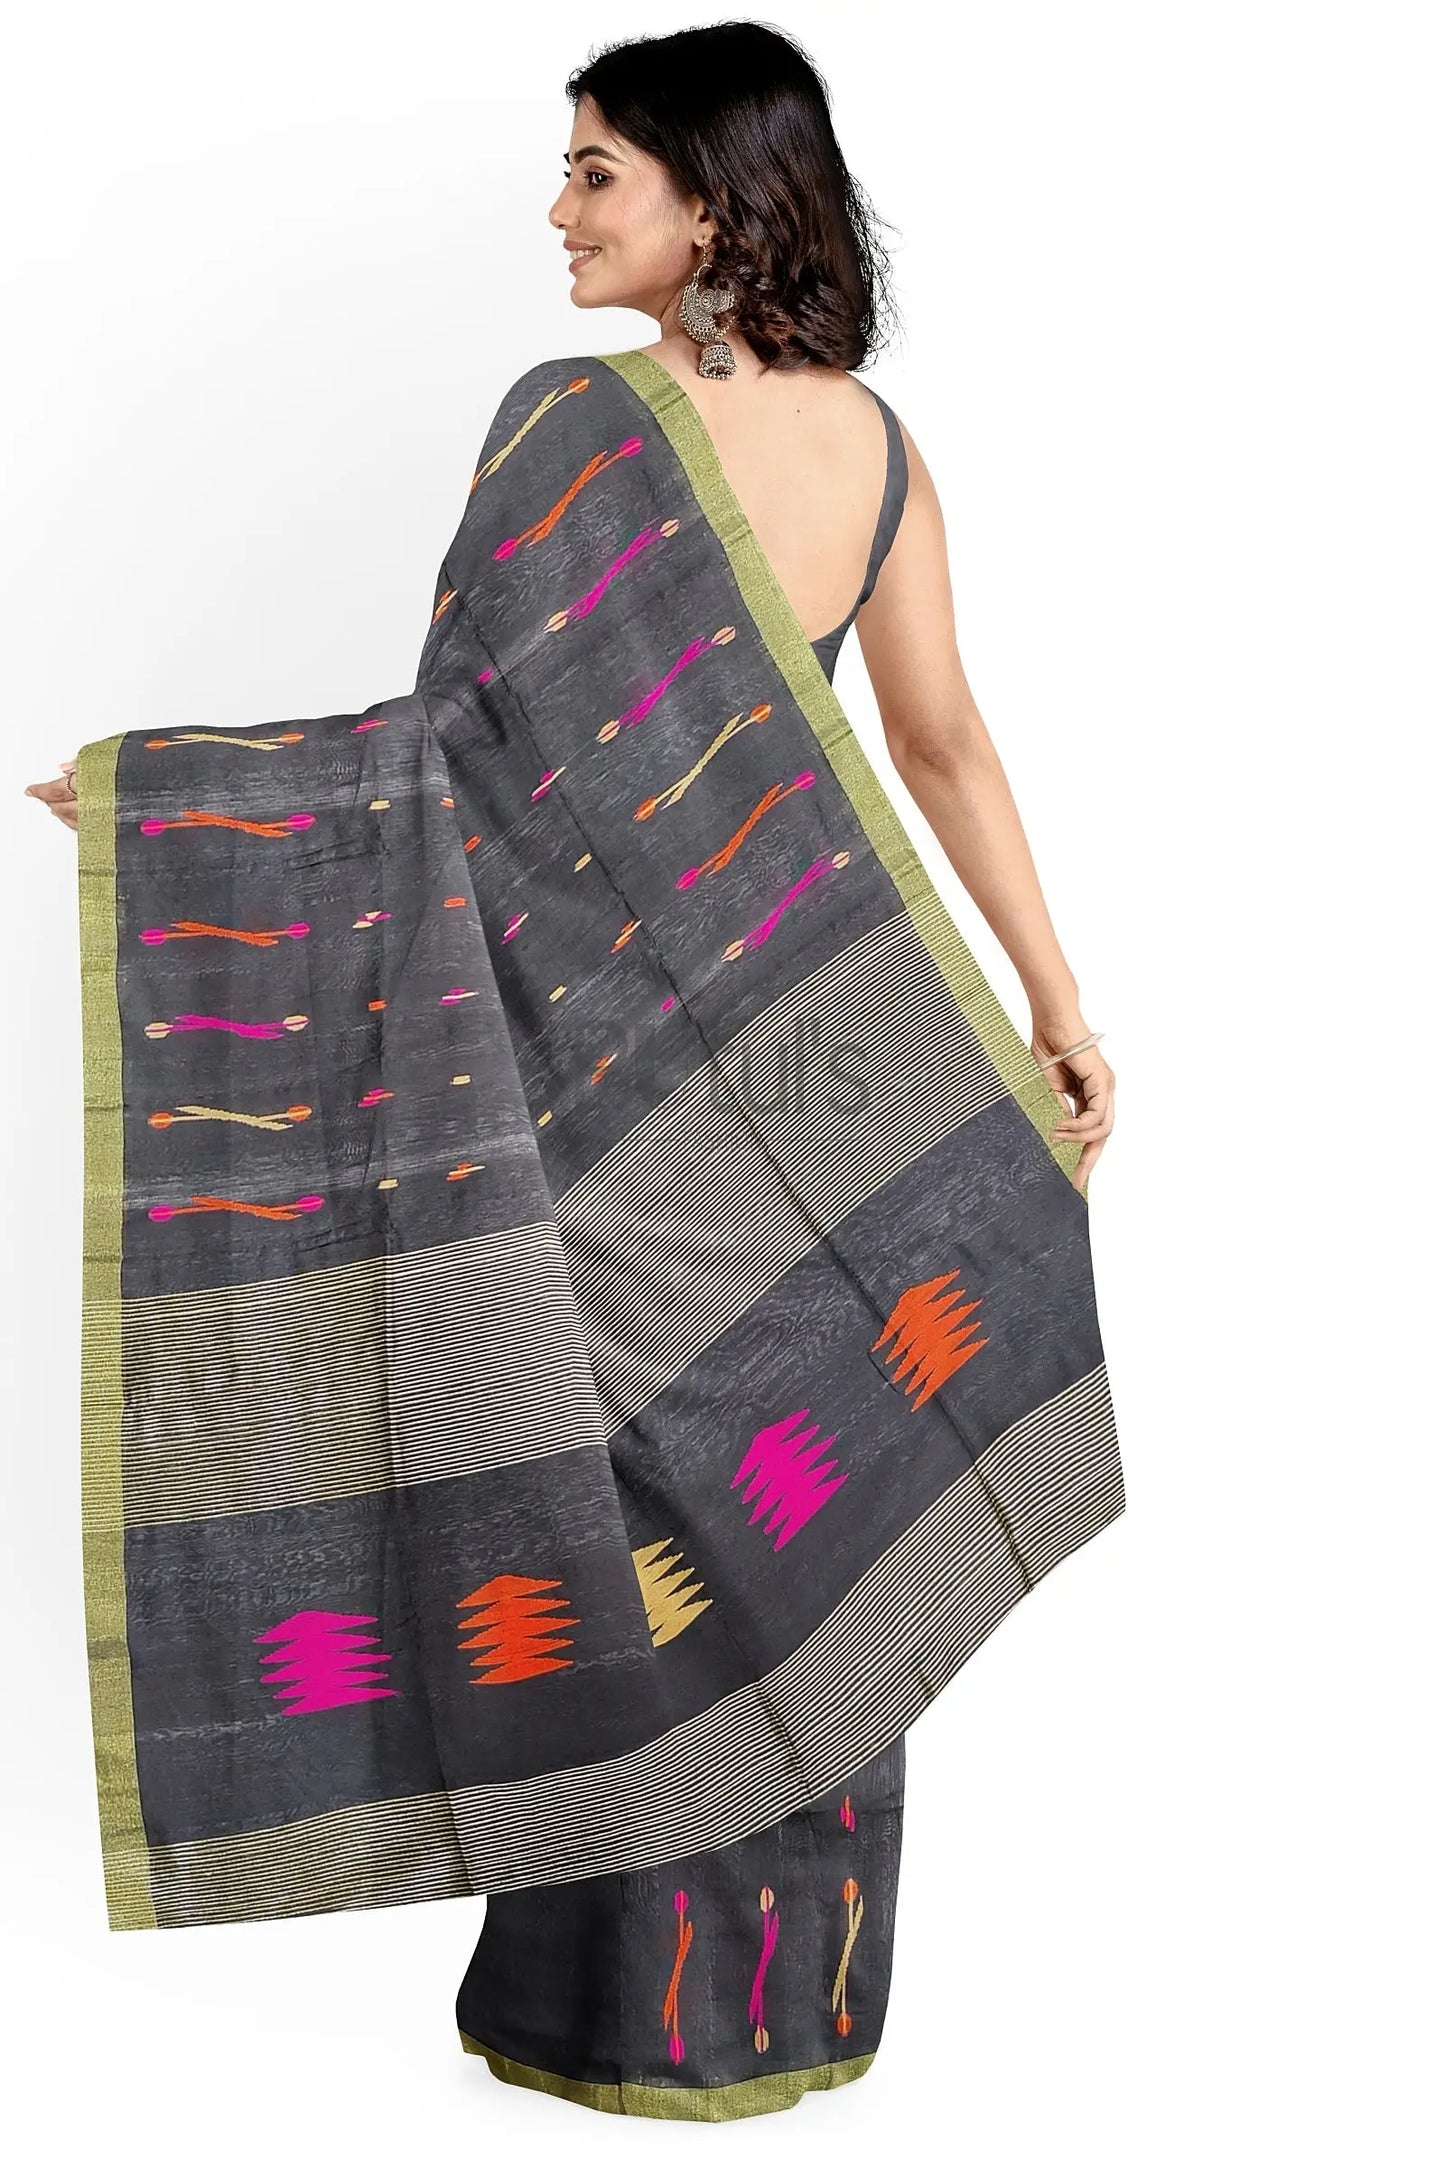 Handloom saree of a trendy design Putul's Fashion